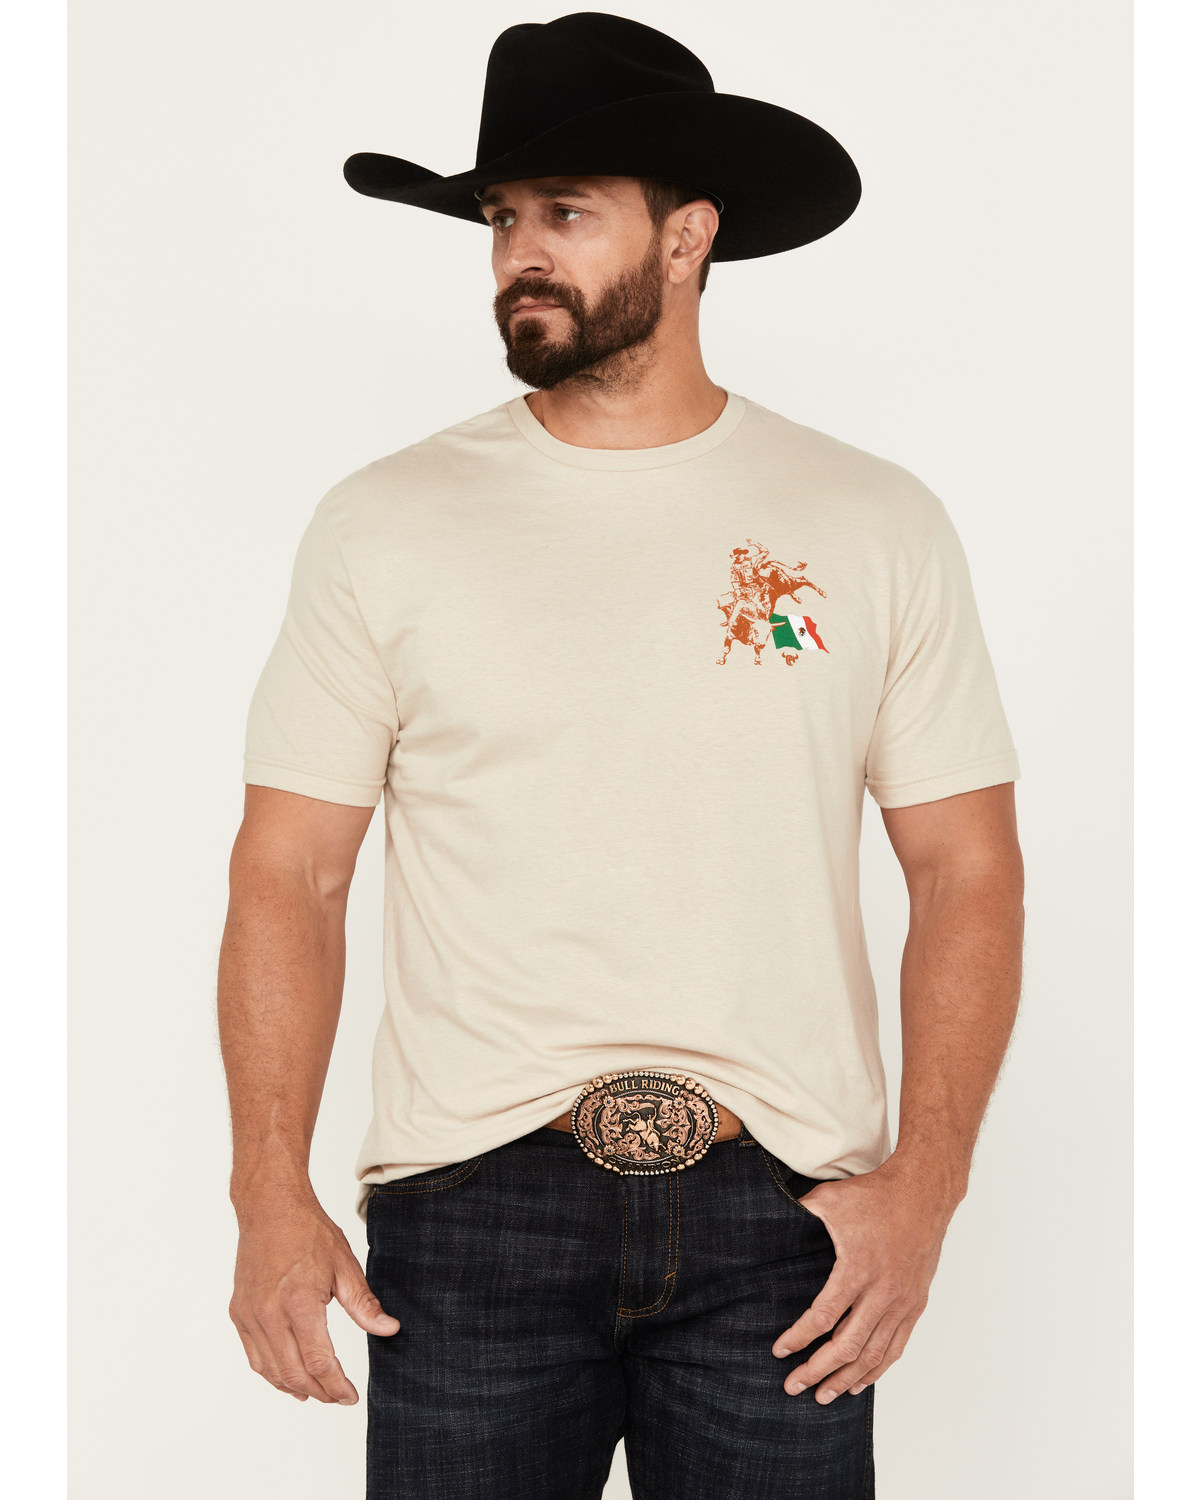 Cowboy Hardware Men's Mexico Flag Short Sleeve Graphic T-Shirt